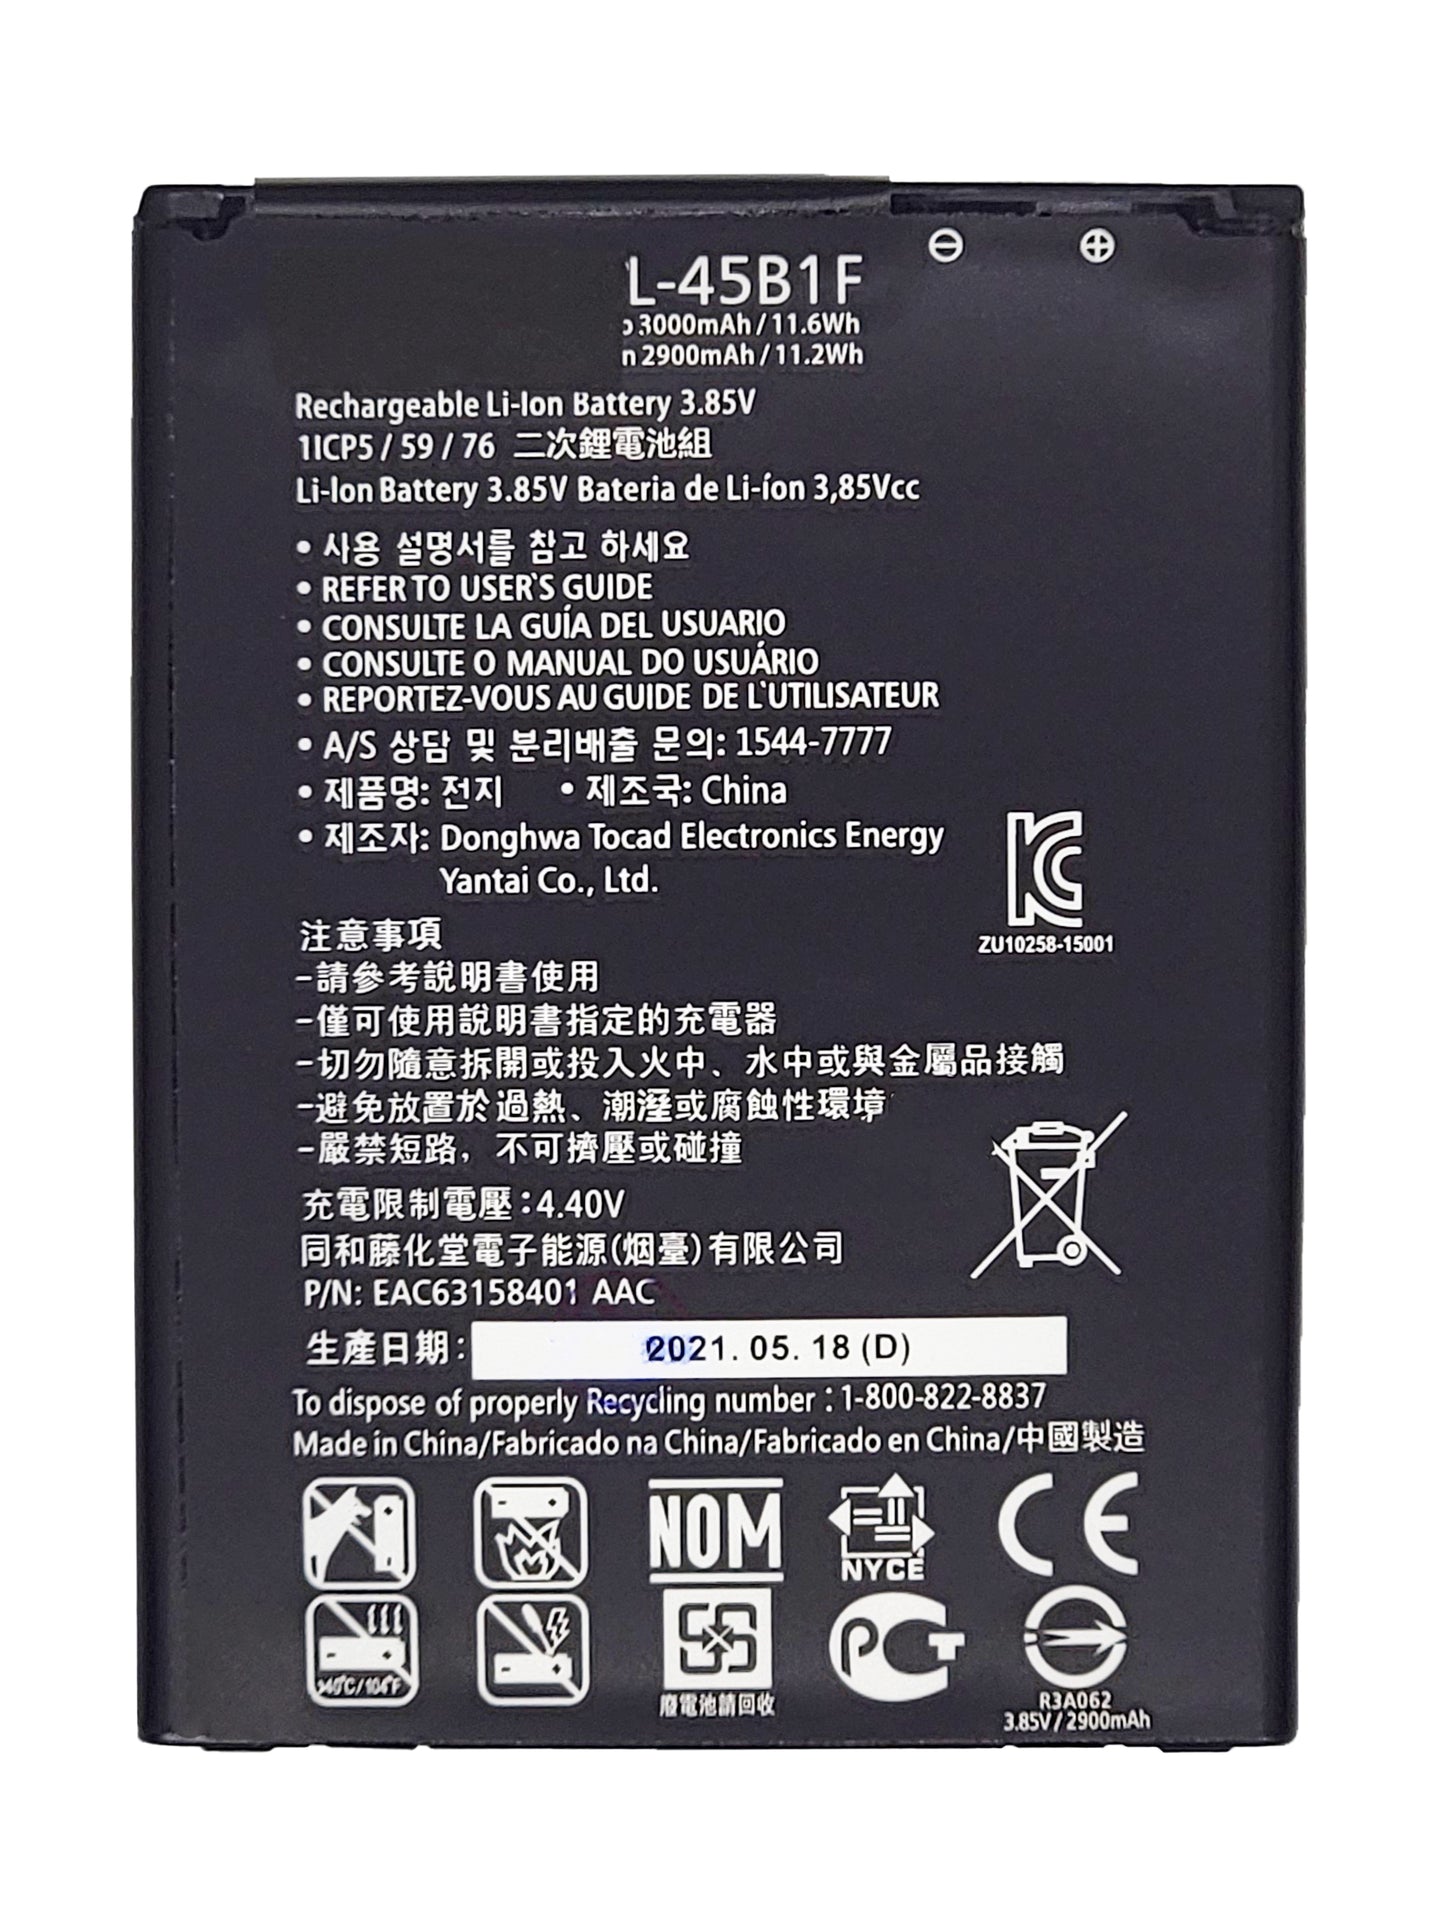 LGS Stylo 2 / Stylo 2 Plus Battery (BL- 45B1F) (Premium)